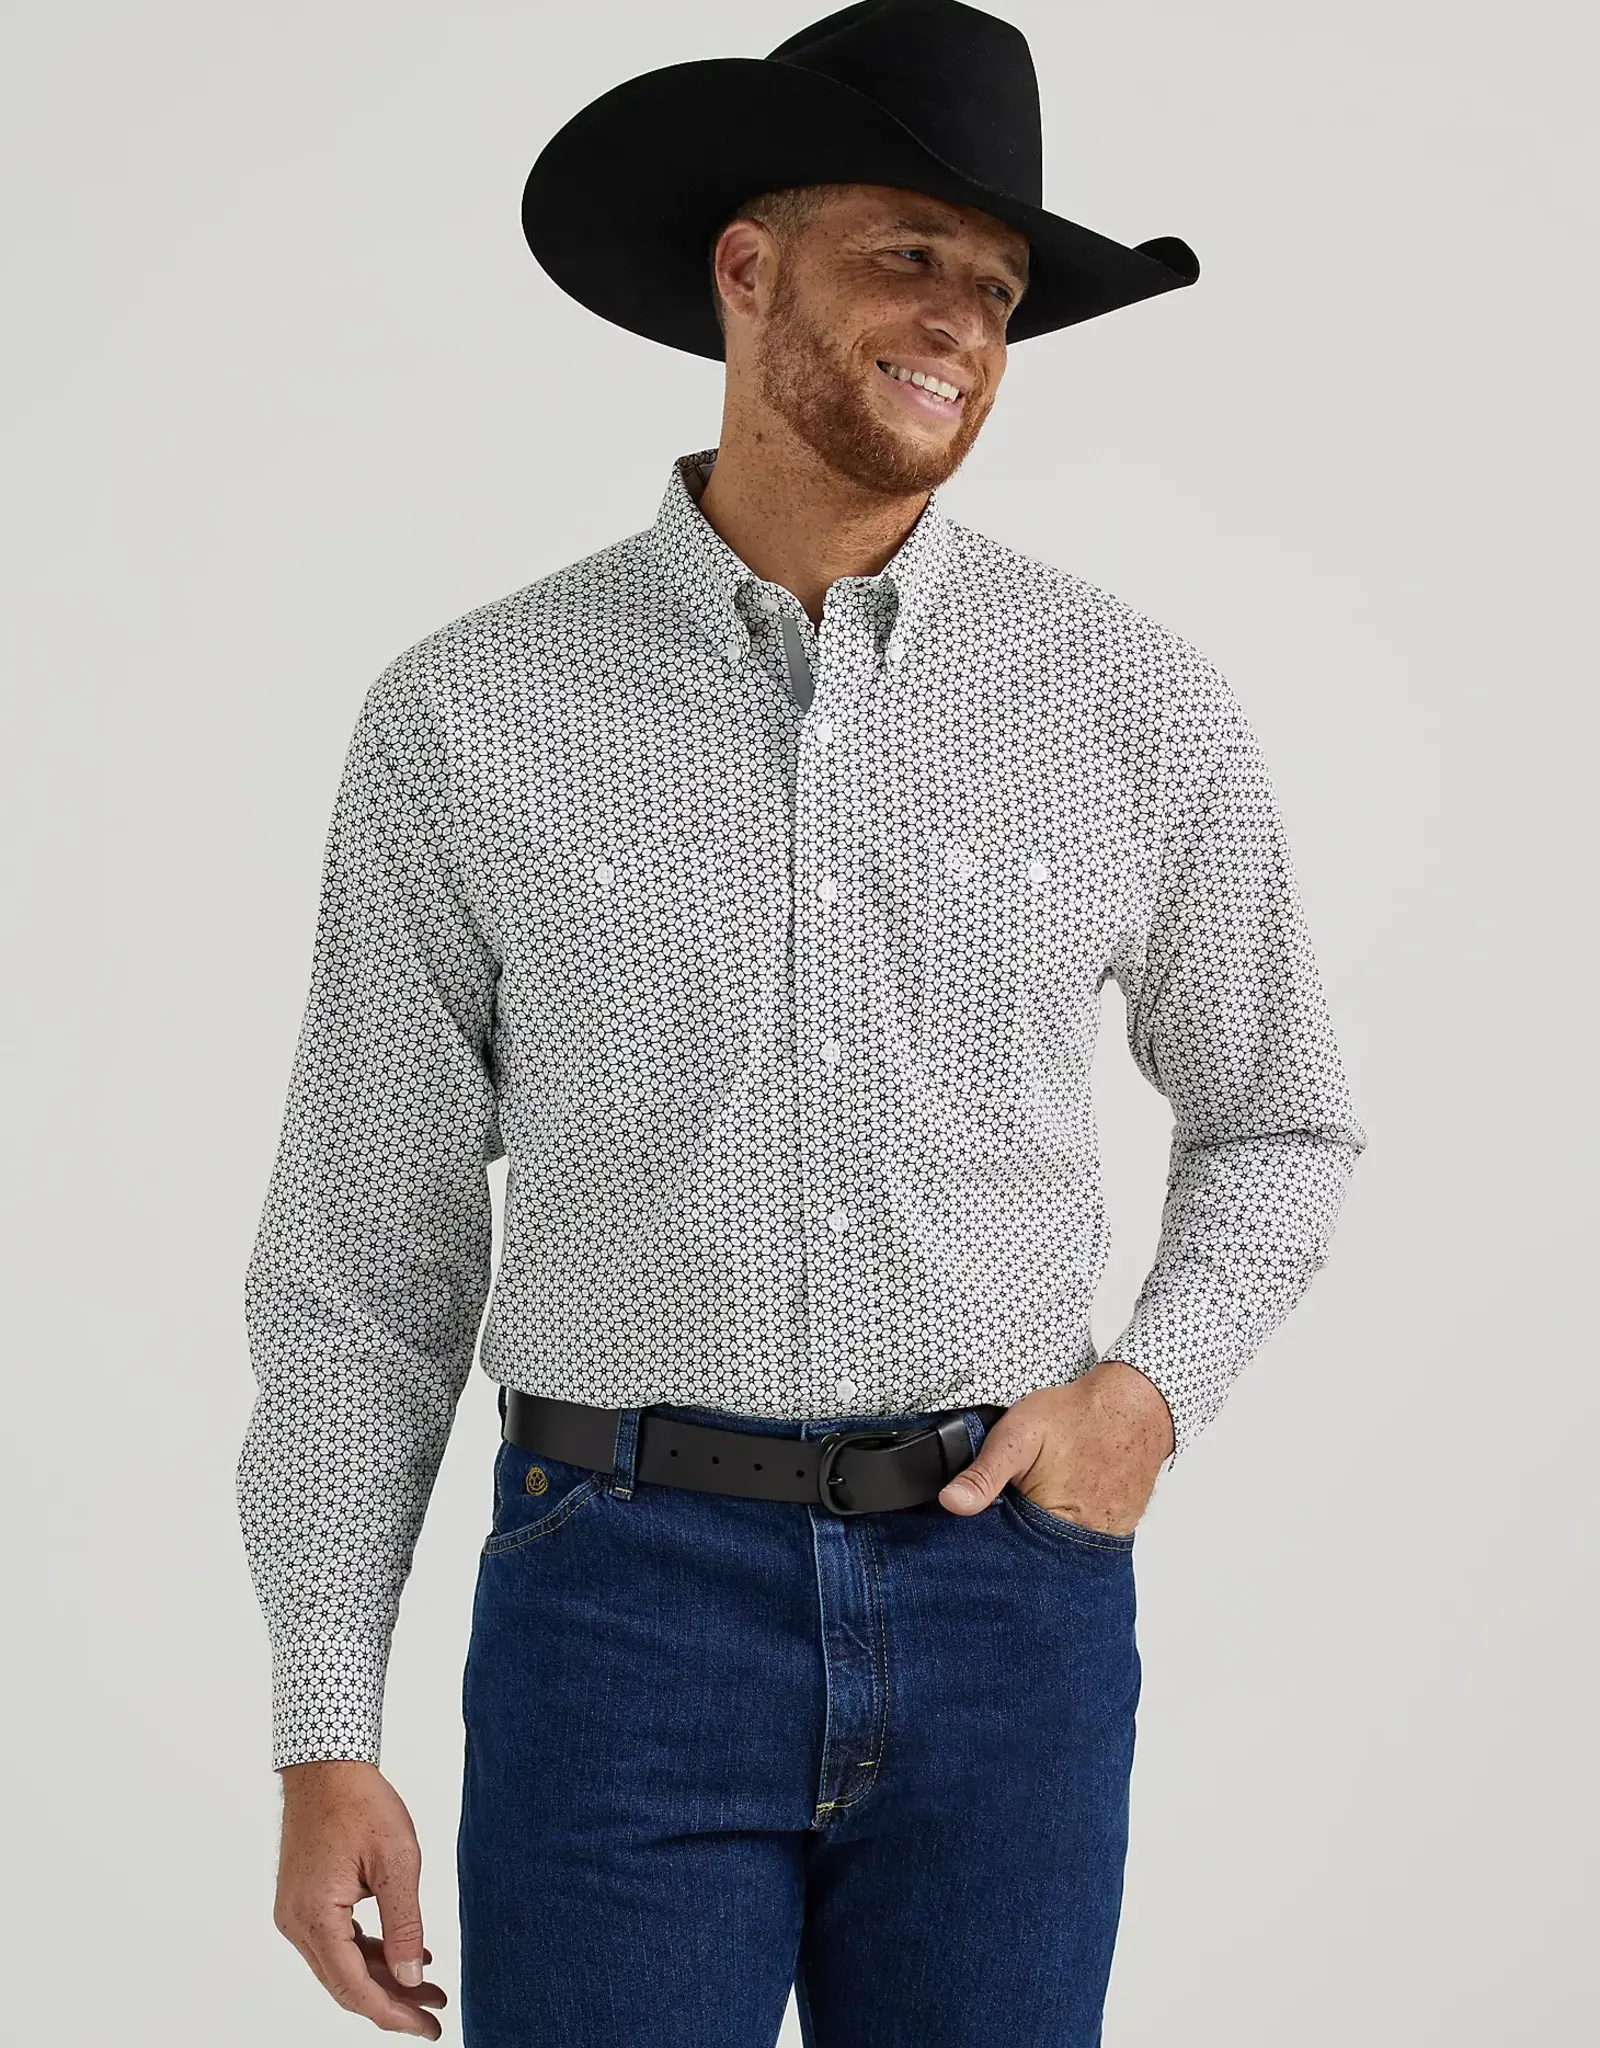 Talls - Mens George Strait Wrangler Stretch Print Button Western Shirt